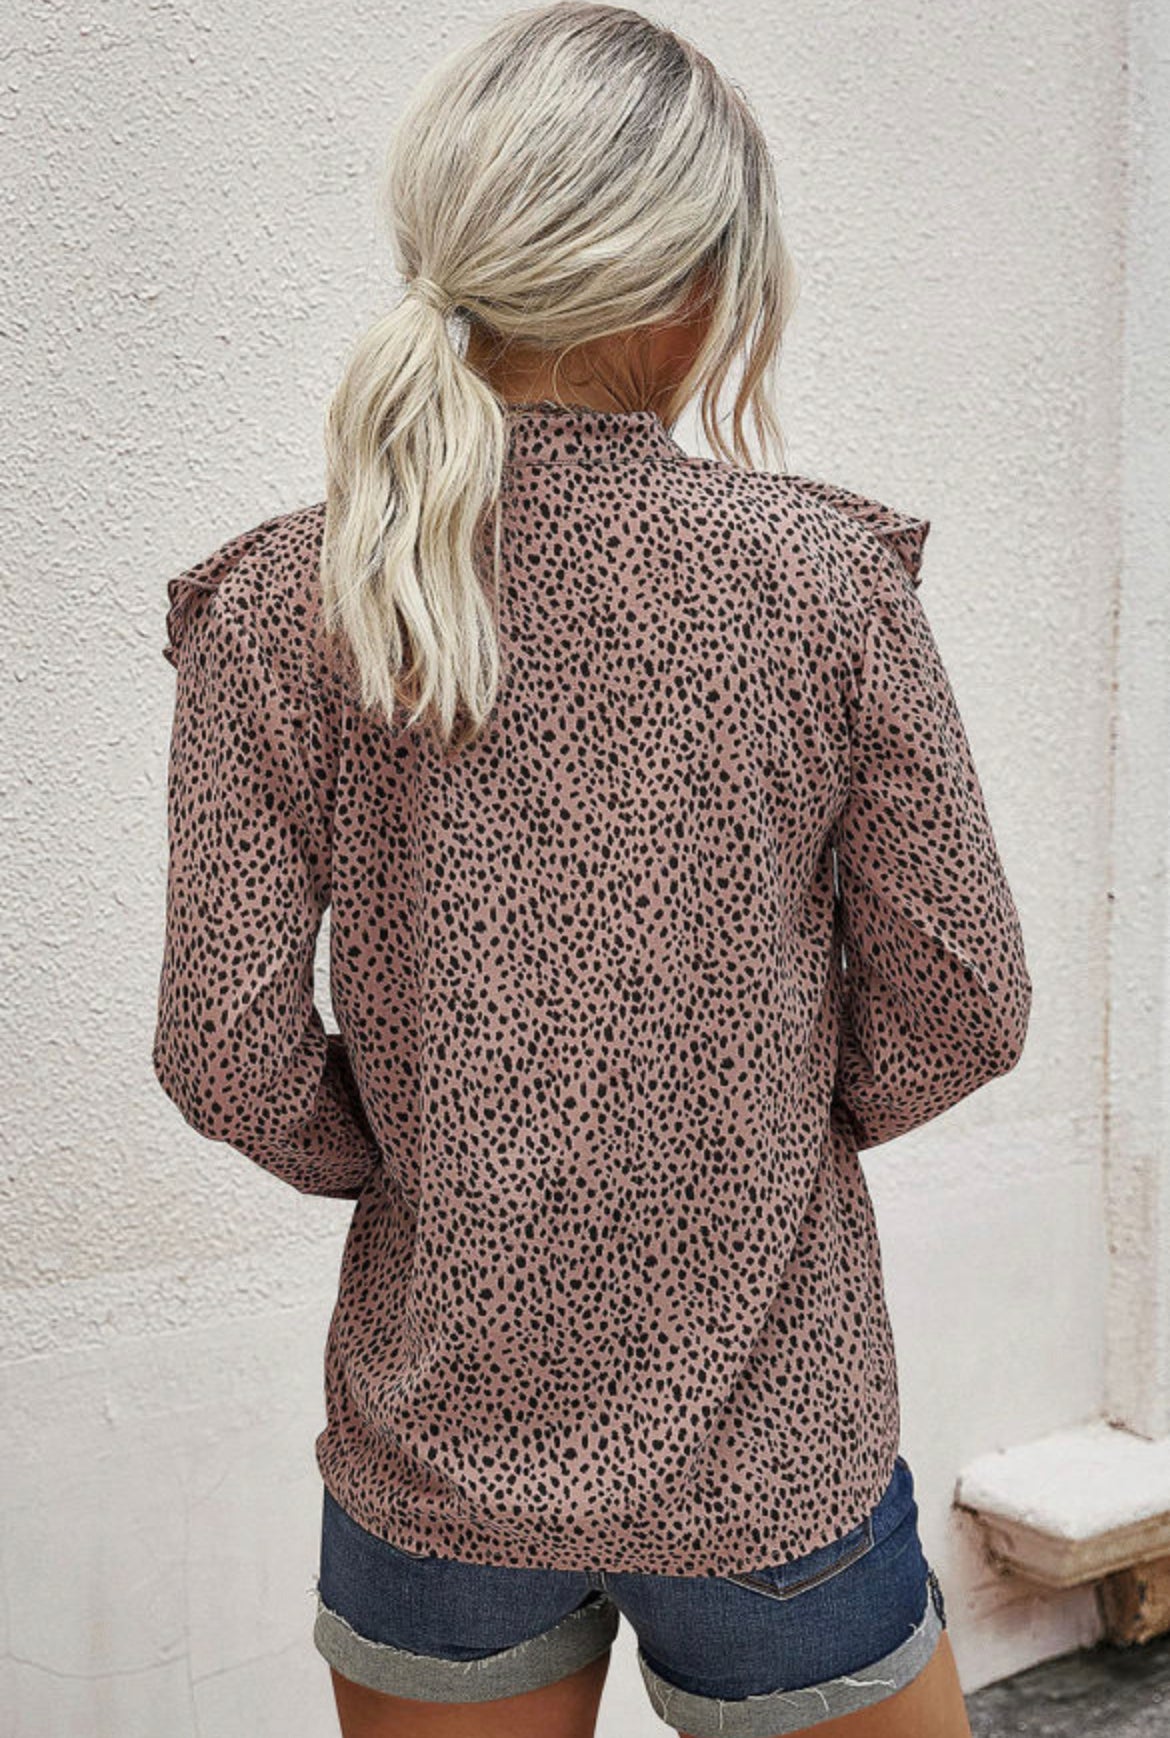 Leopard Print Long Sleeve Ruffle Loose Blouse